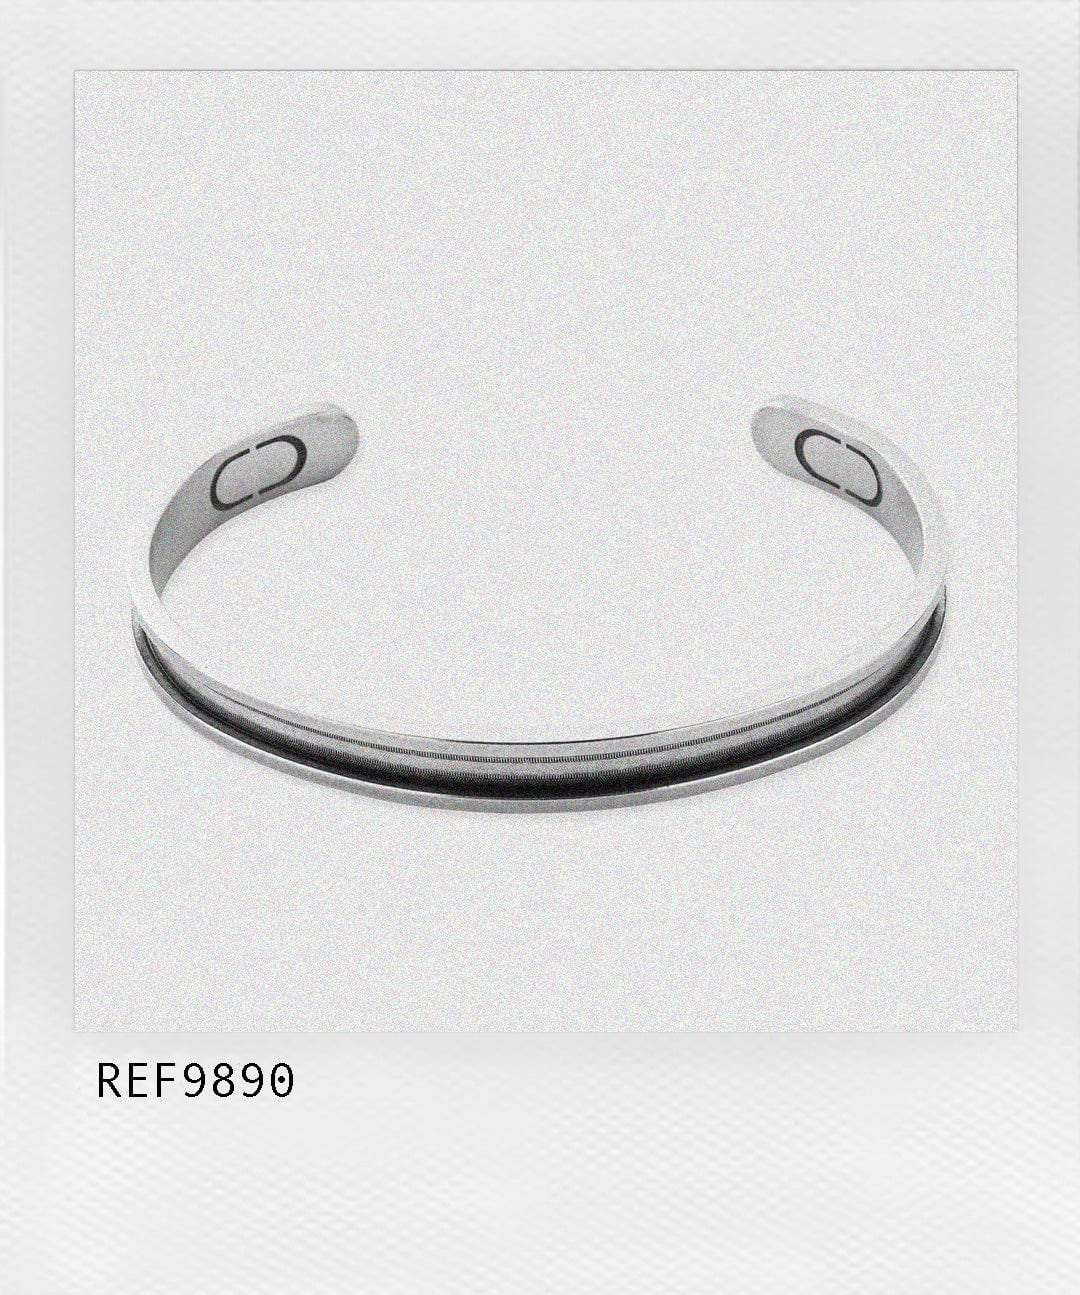 Cuff Bracelet (Silver)